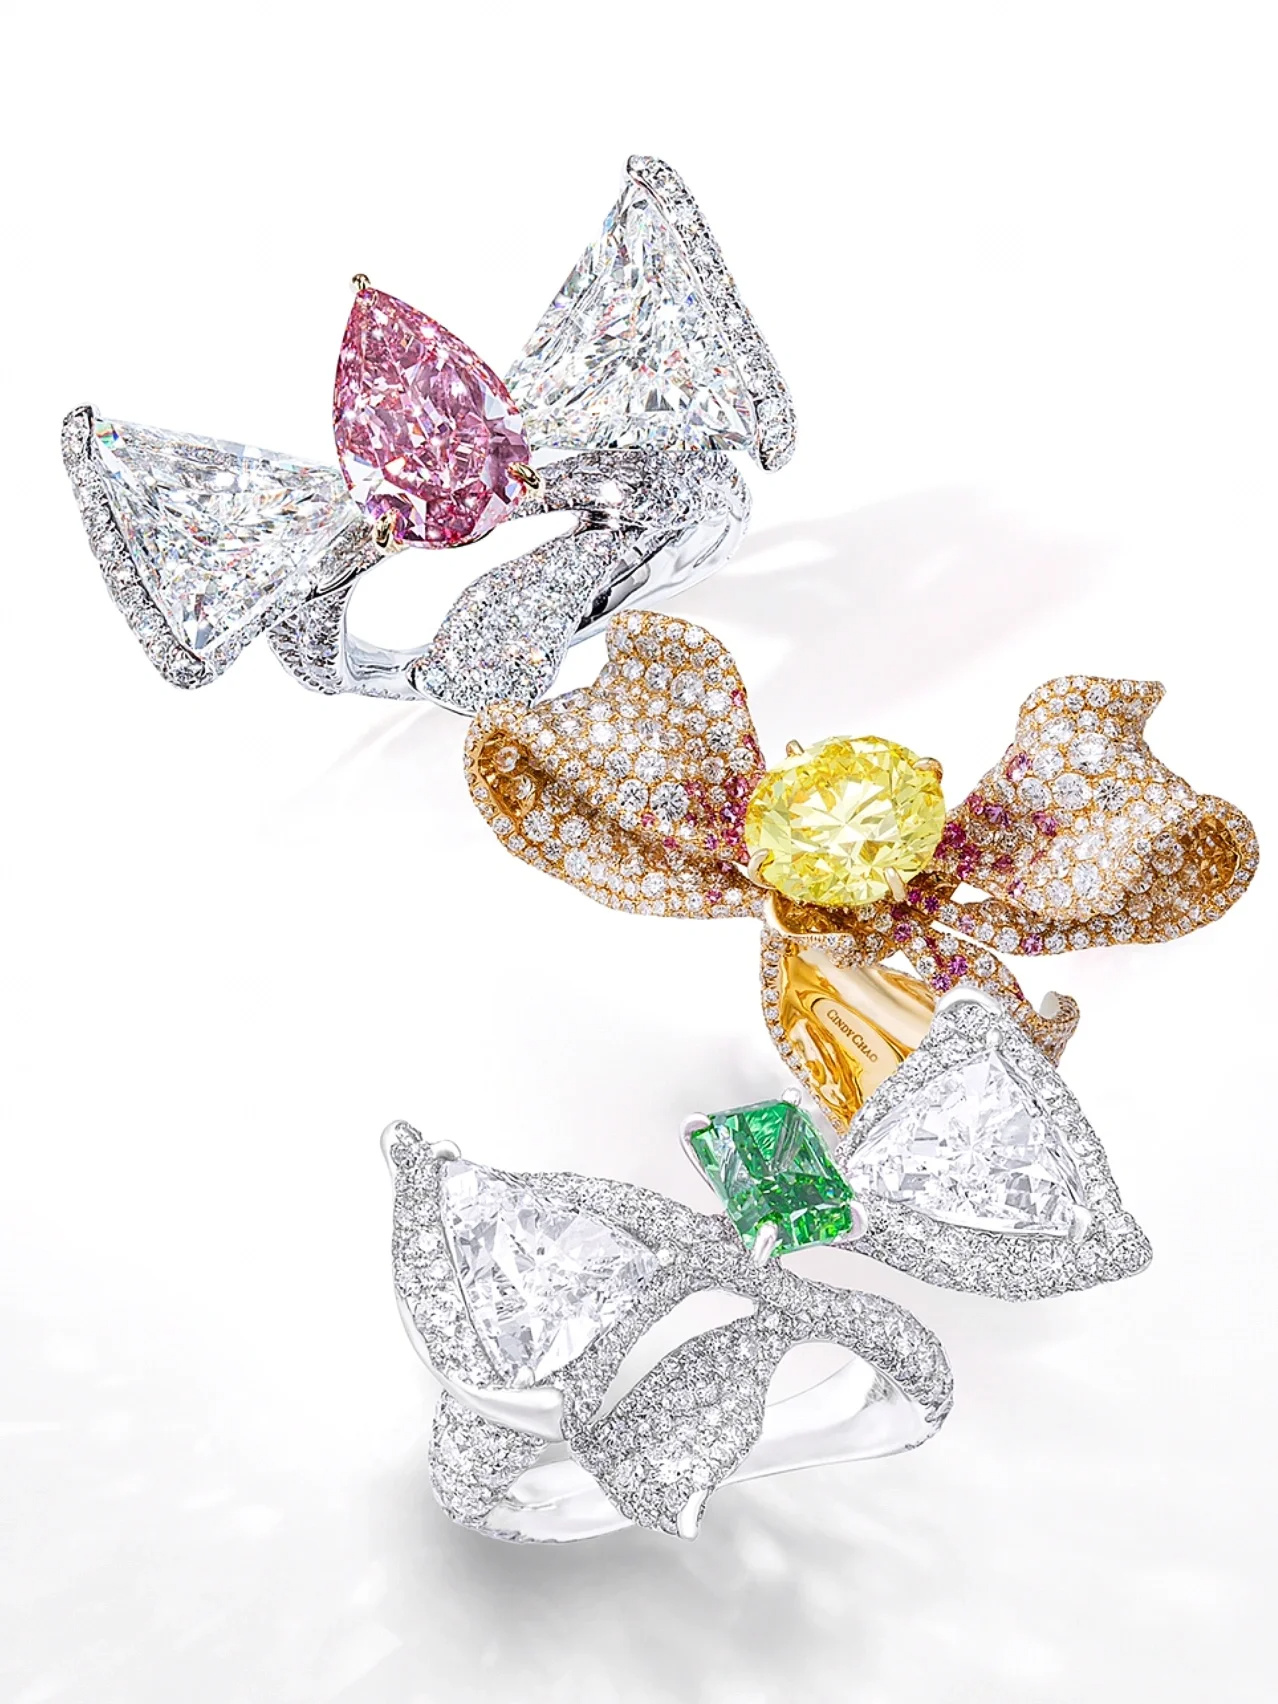 Cultivate colored diamond jewelry